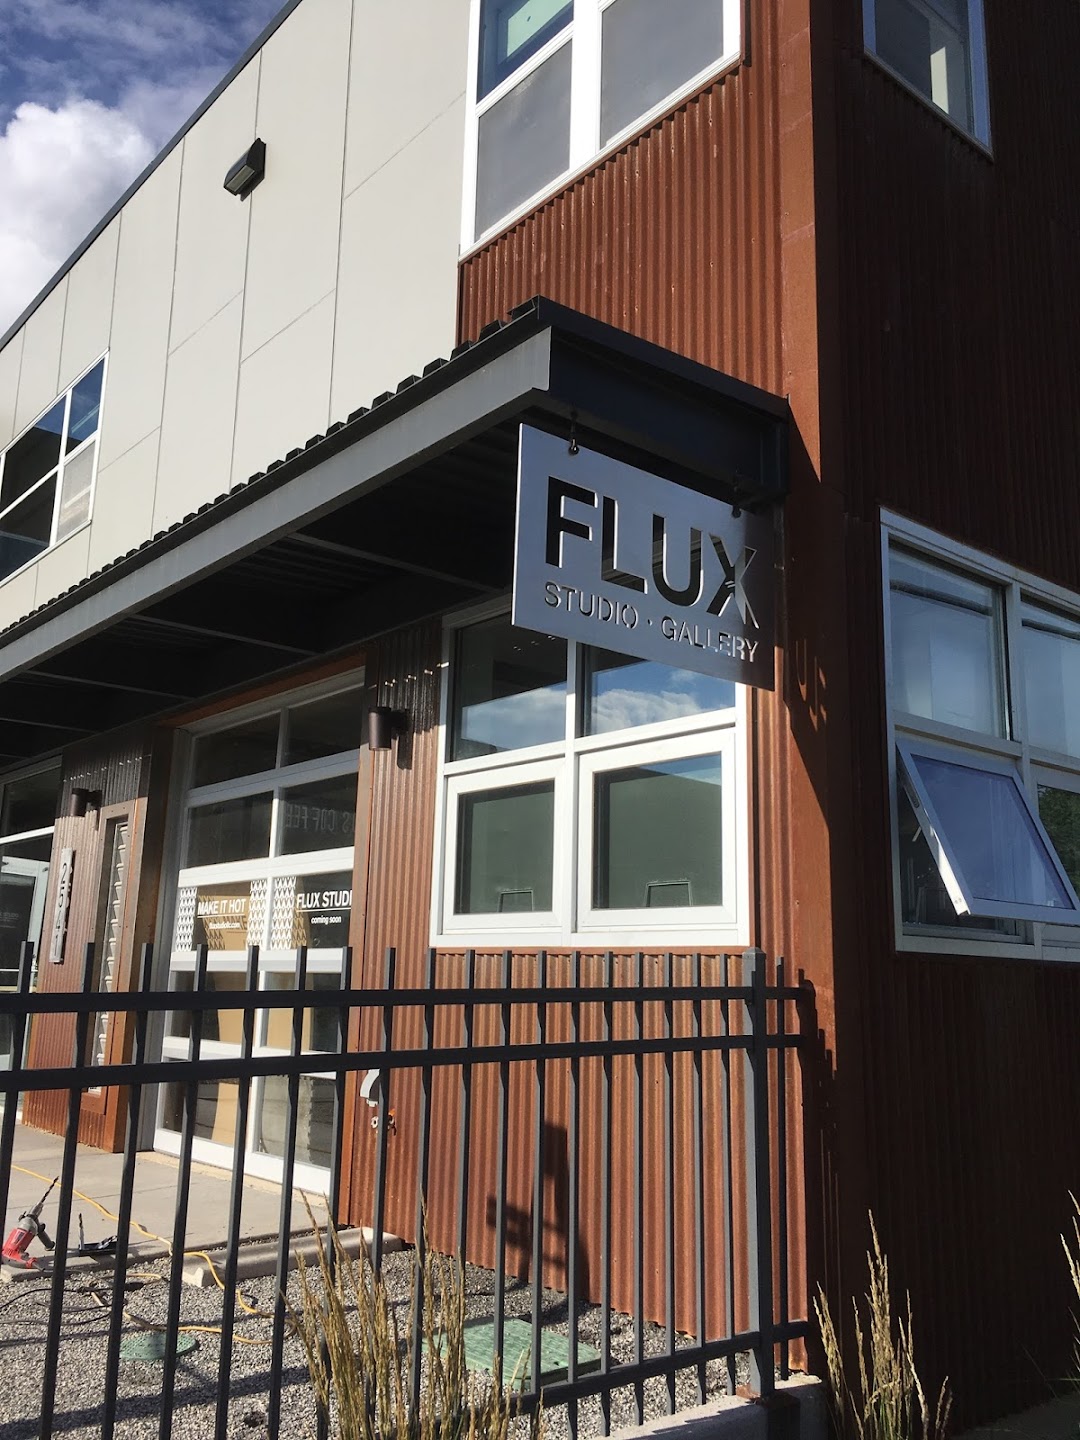 FLUX STUDIO LLC